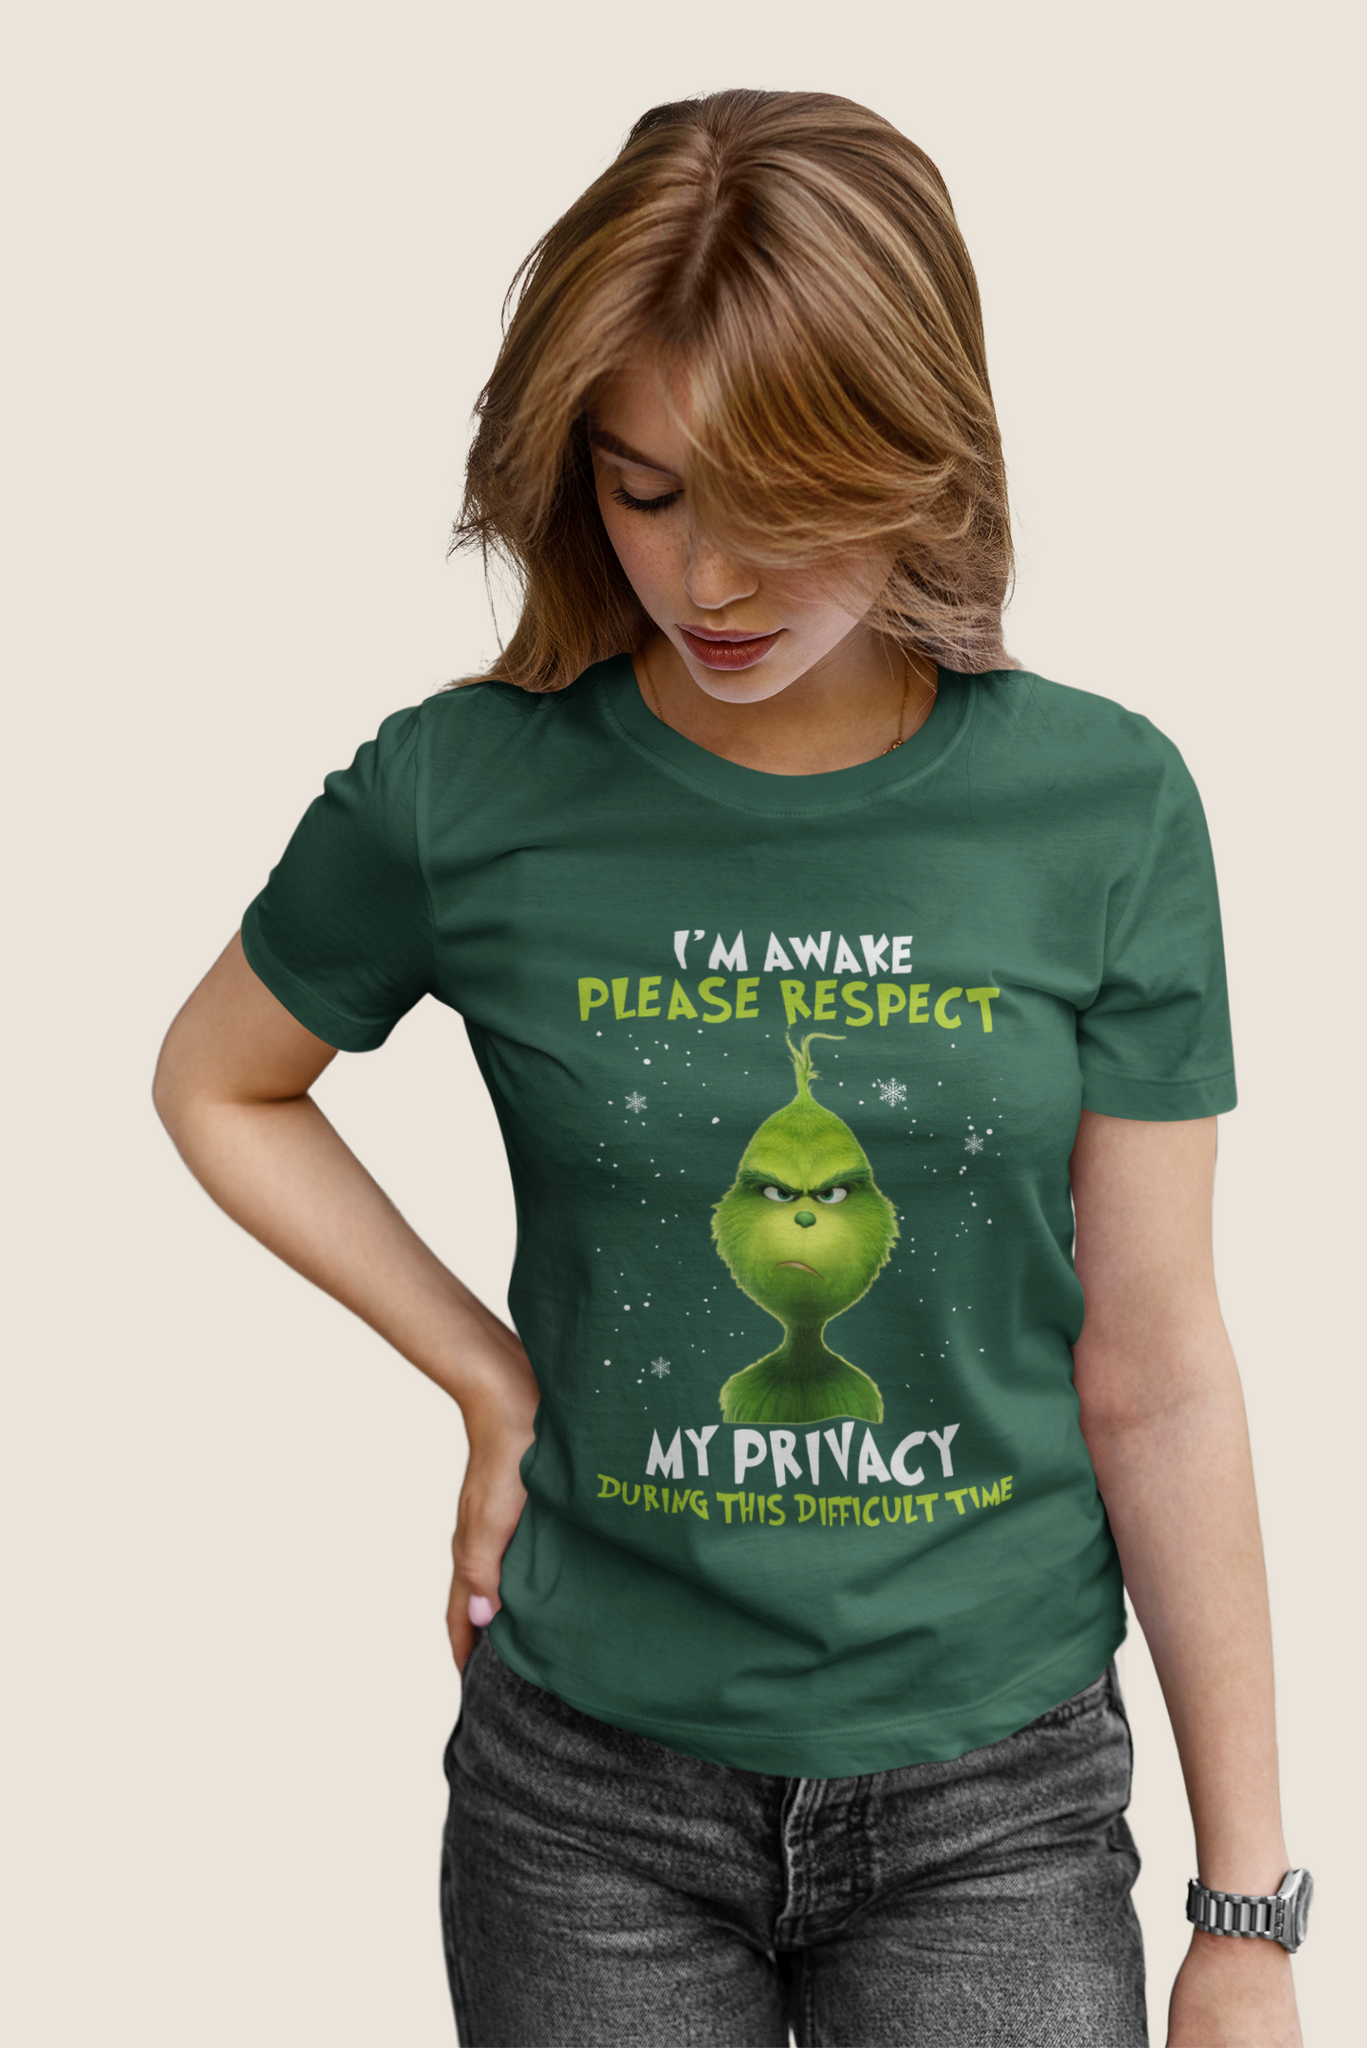 Grinch T Shirt, Im Awake Please Respect My Privacy Tshirt, Christmas Gifts